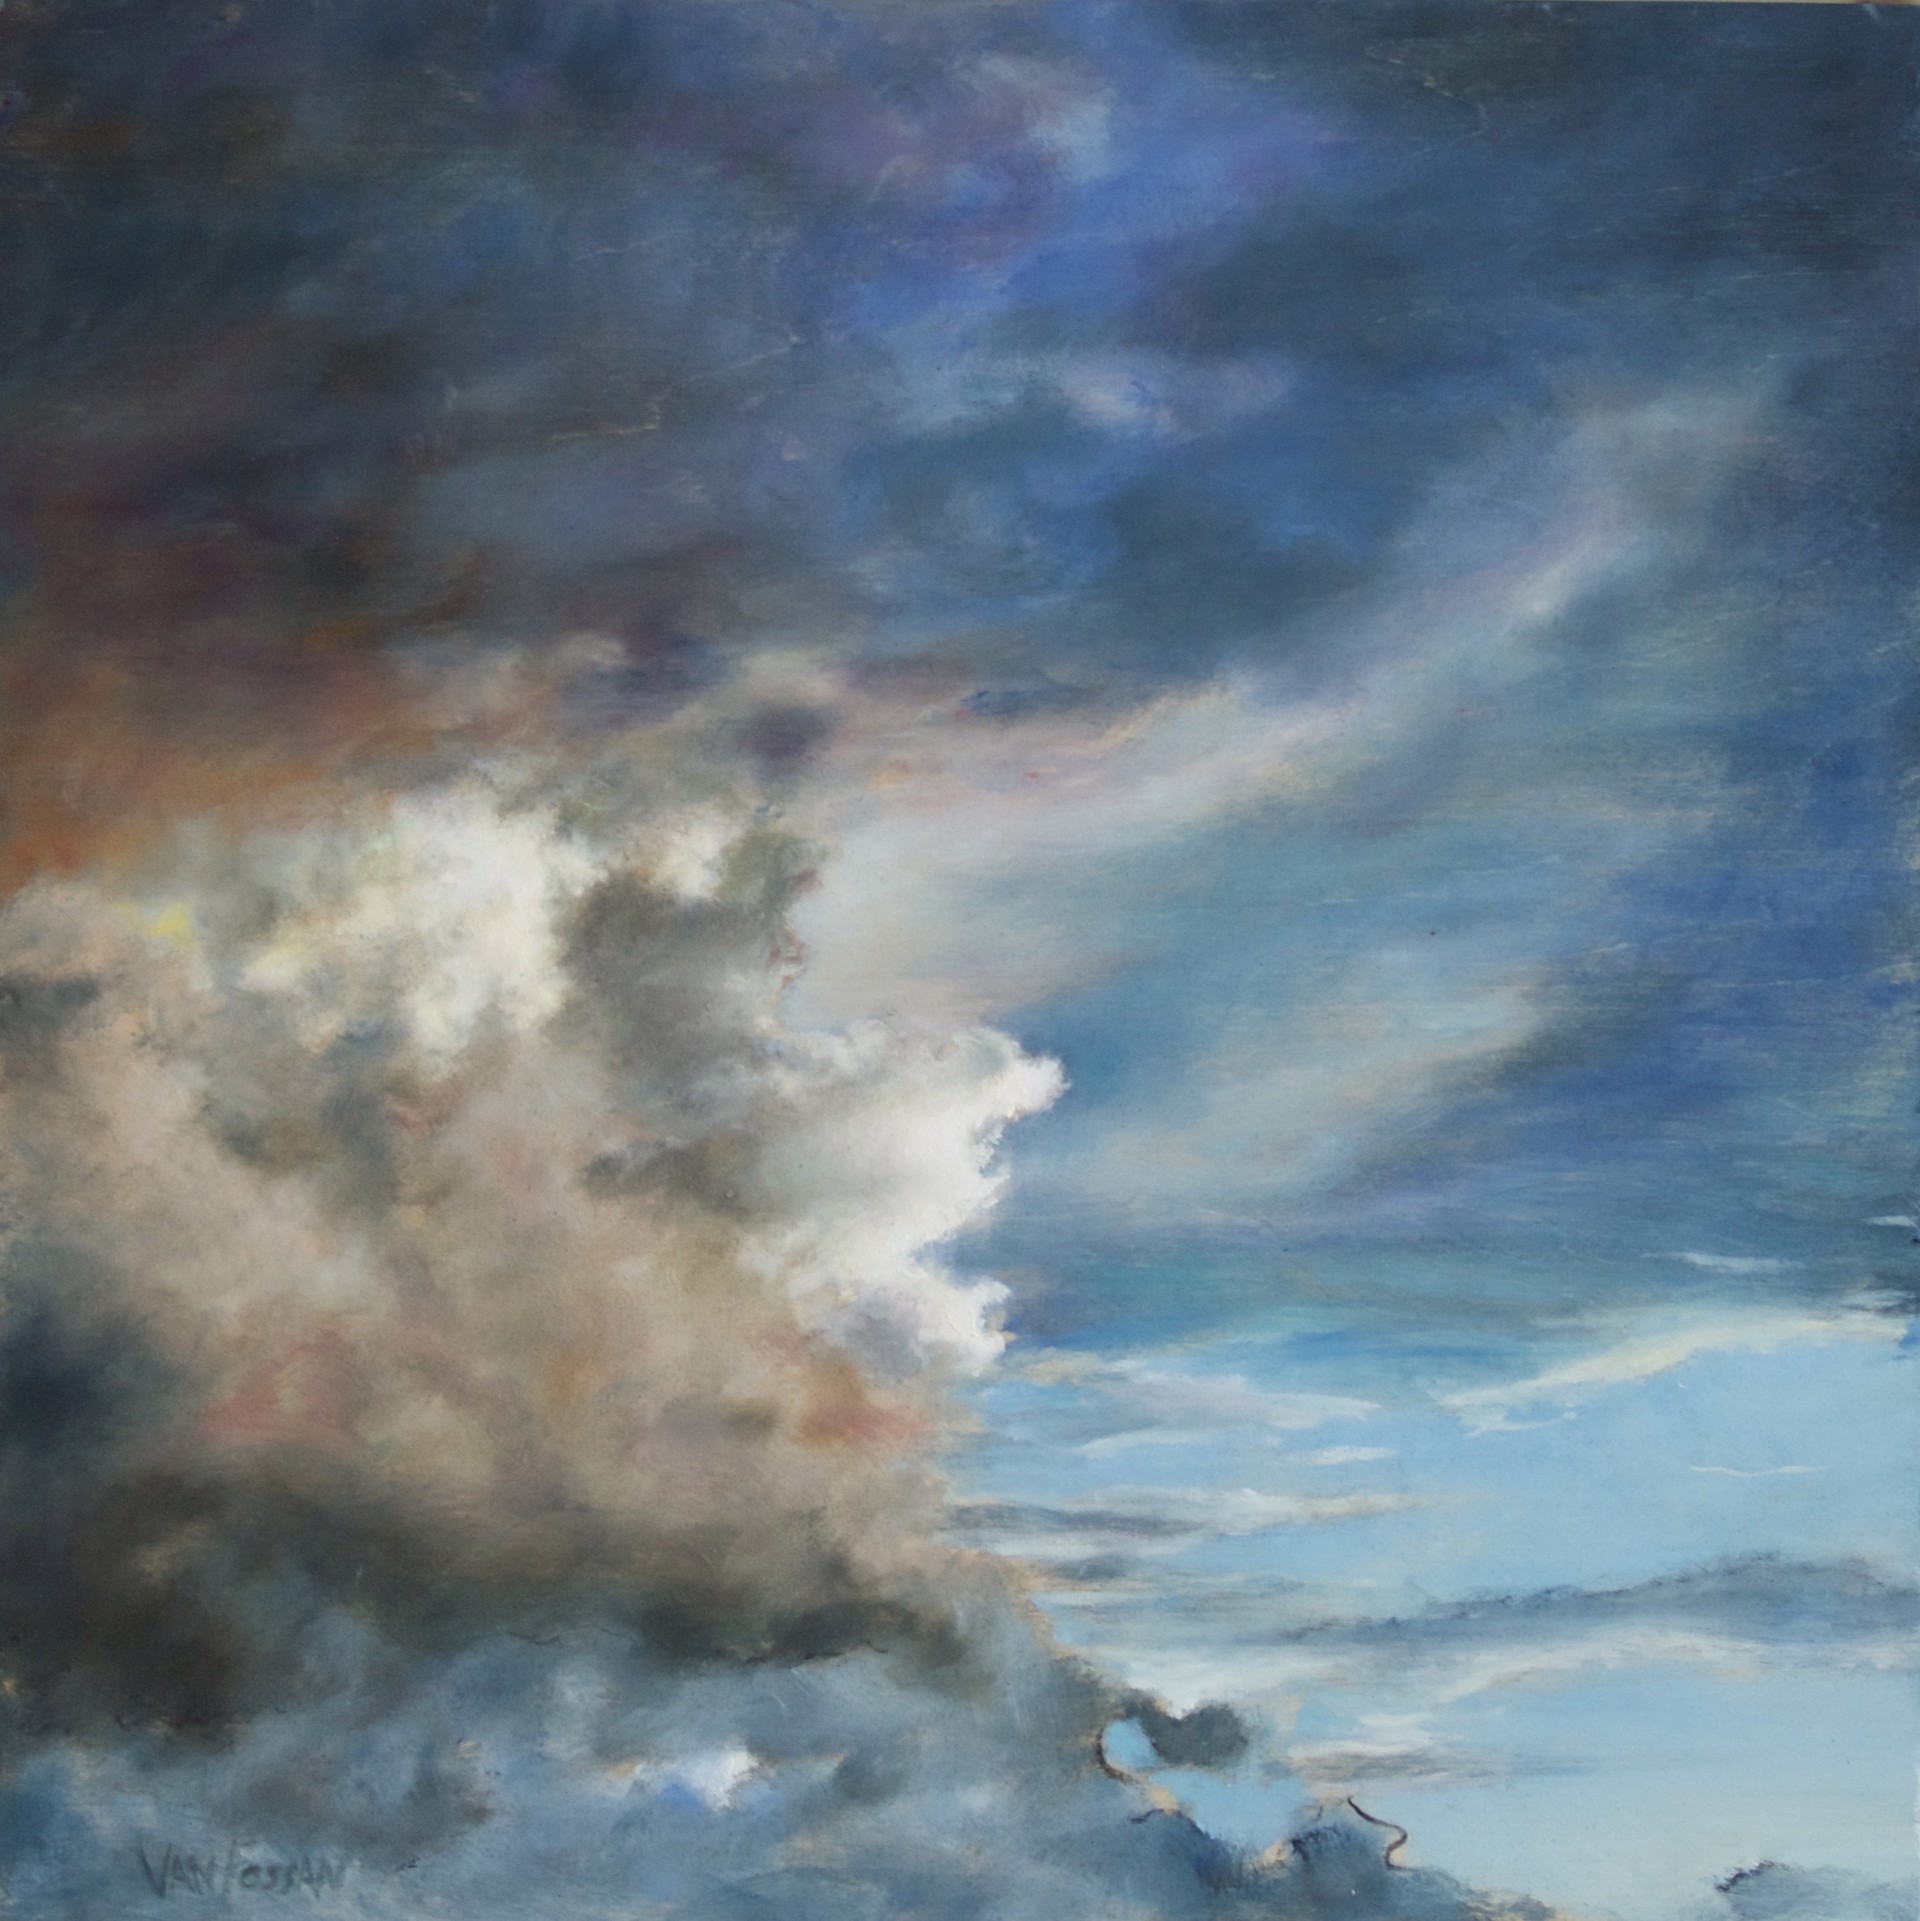 Sky 59 by James Van Fossan